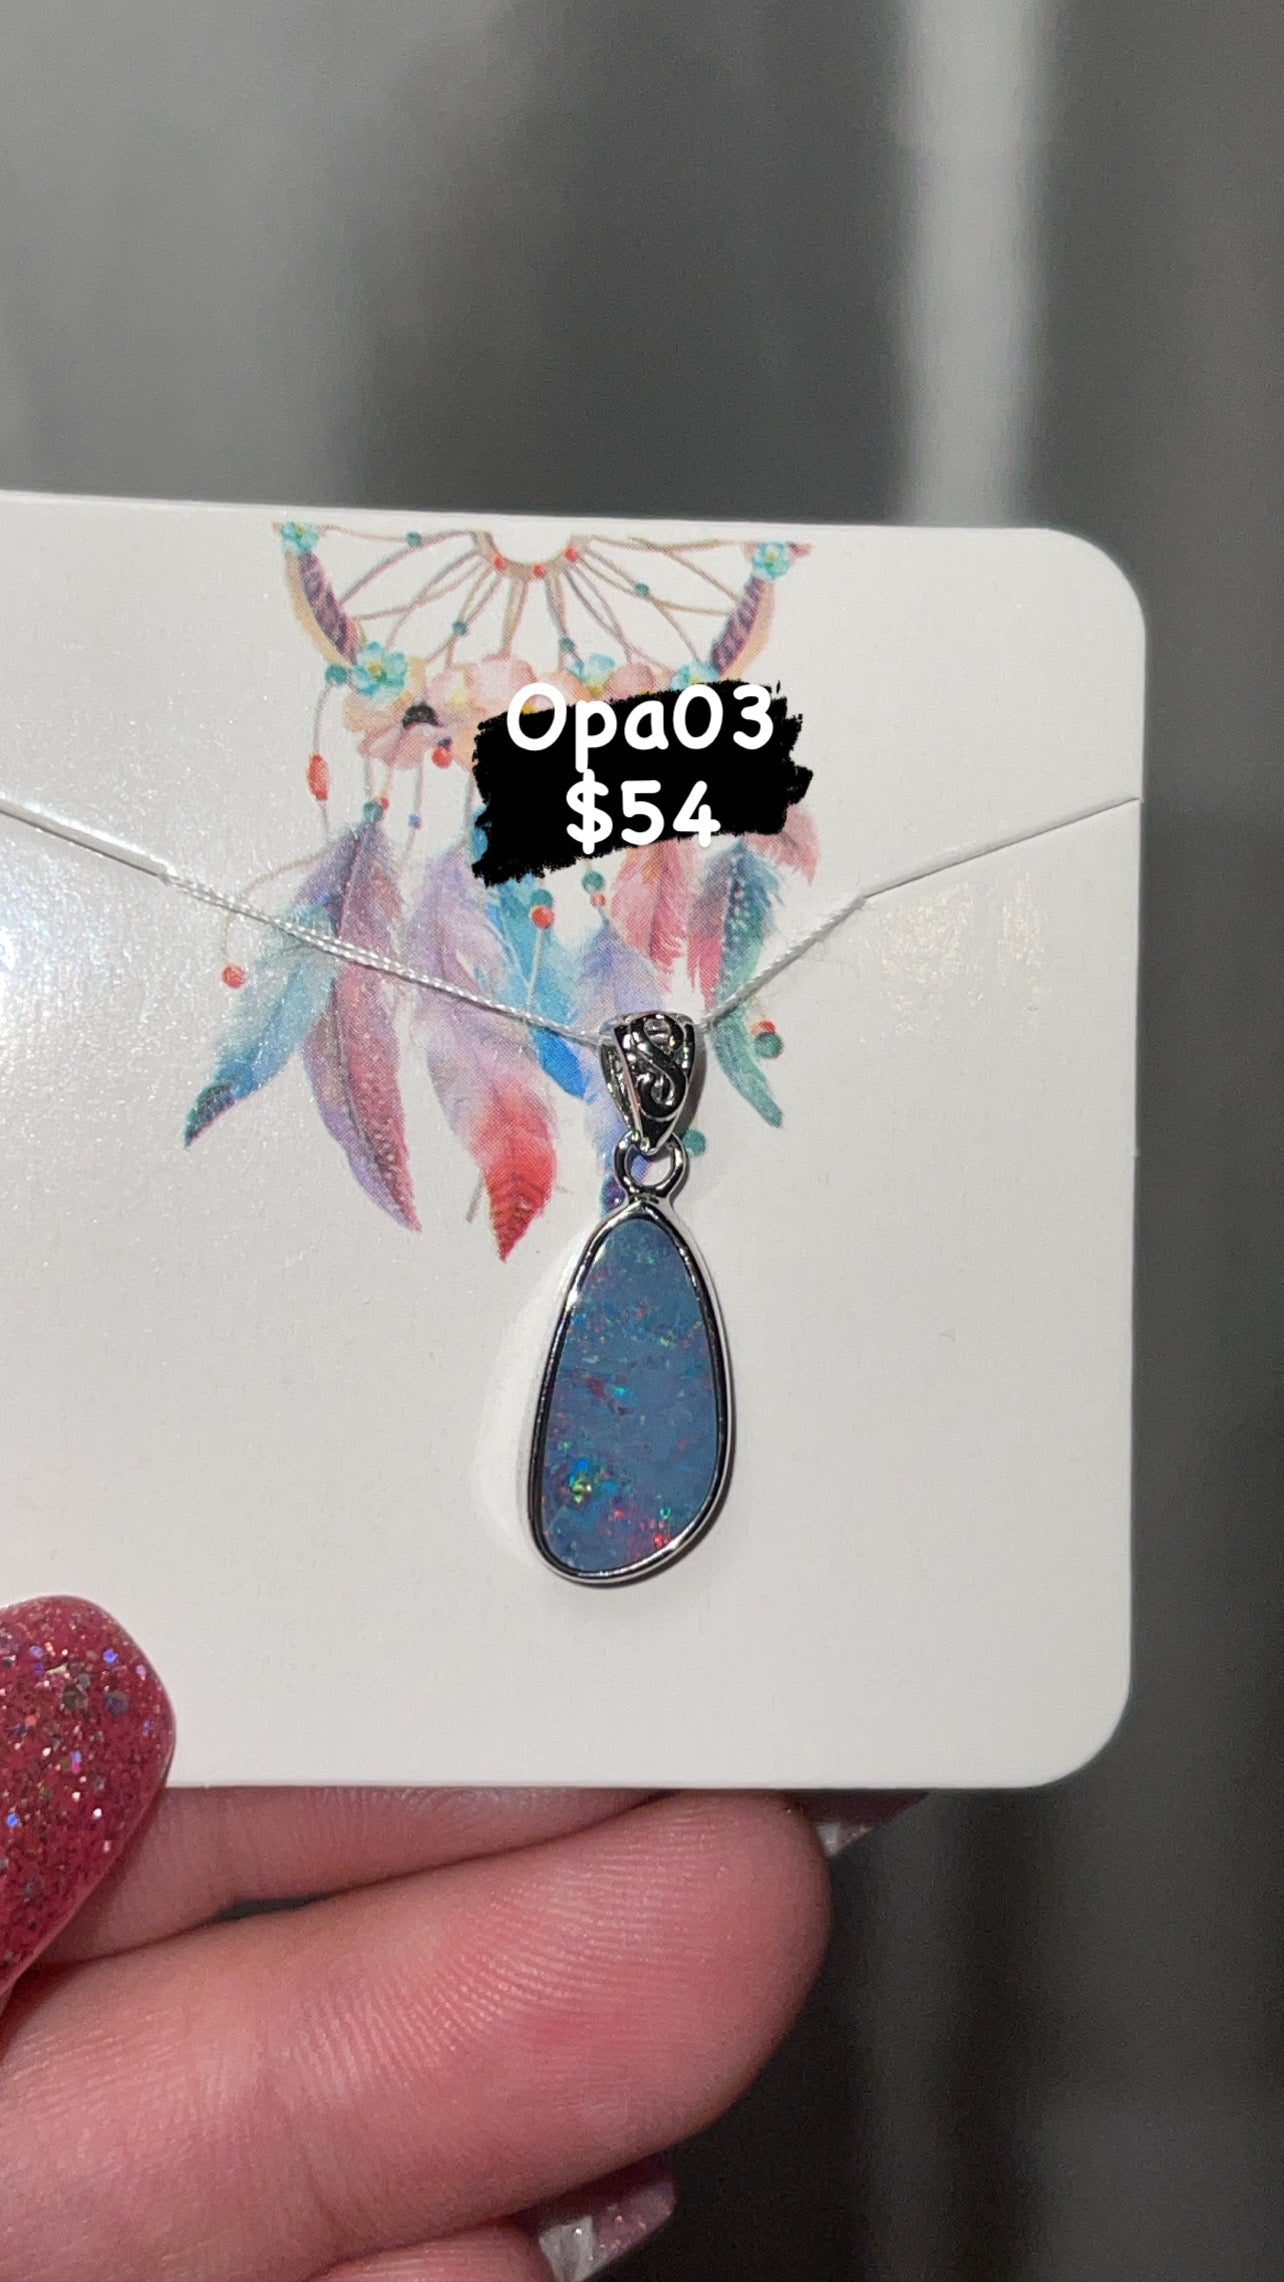 Opal Pendant (Choose Your Own!)